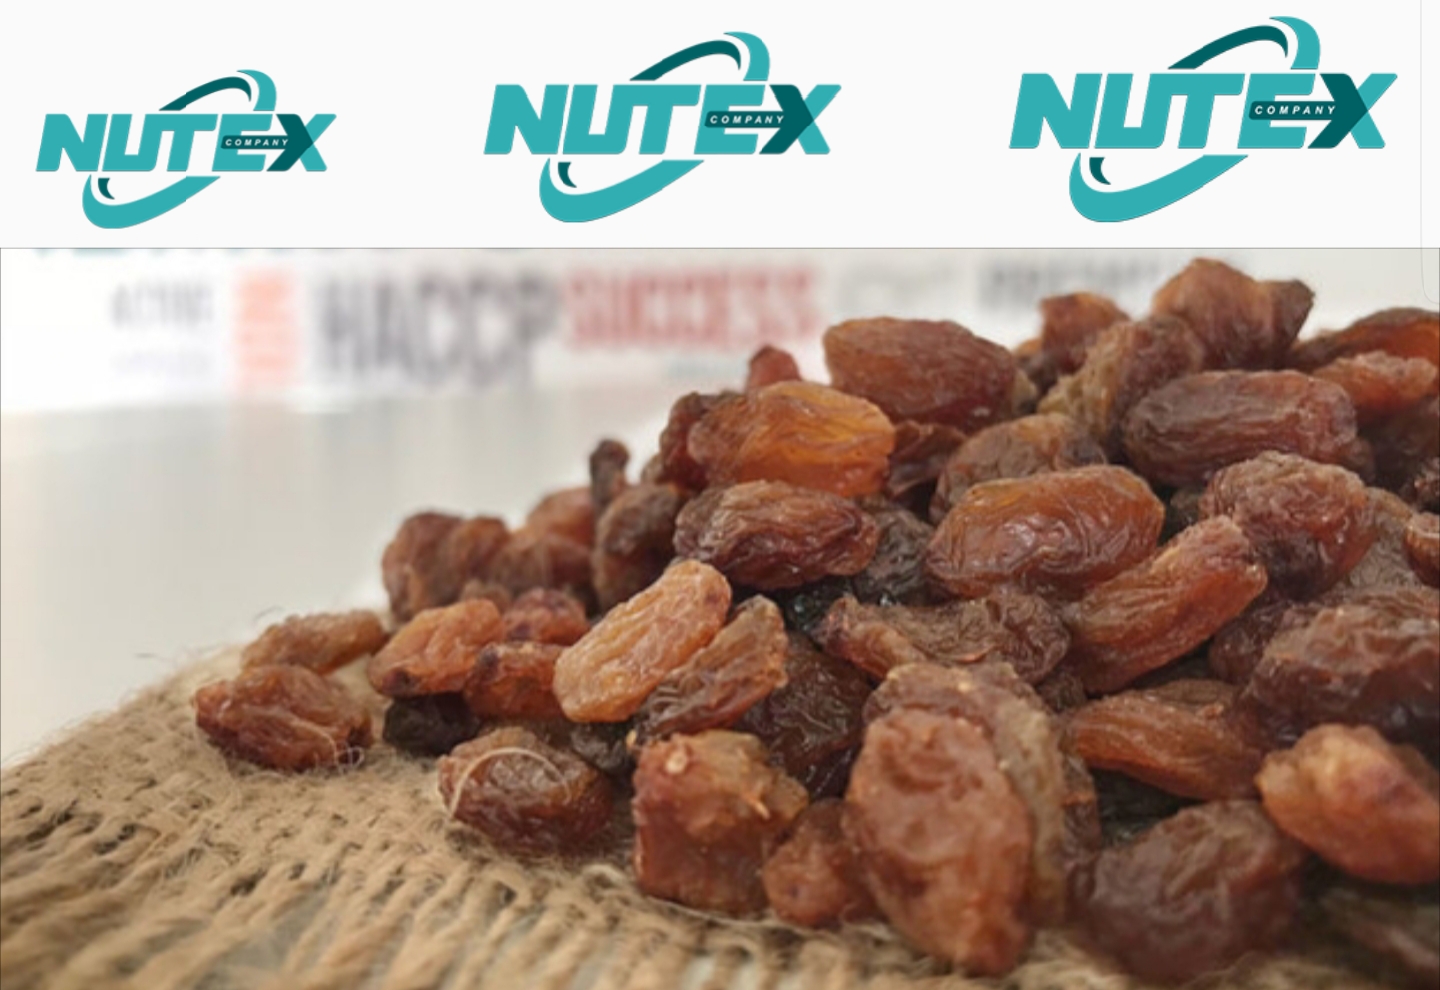 Nutritional Profile - Nutex Raisins company